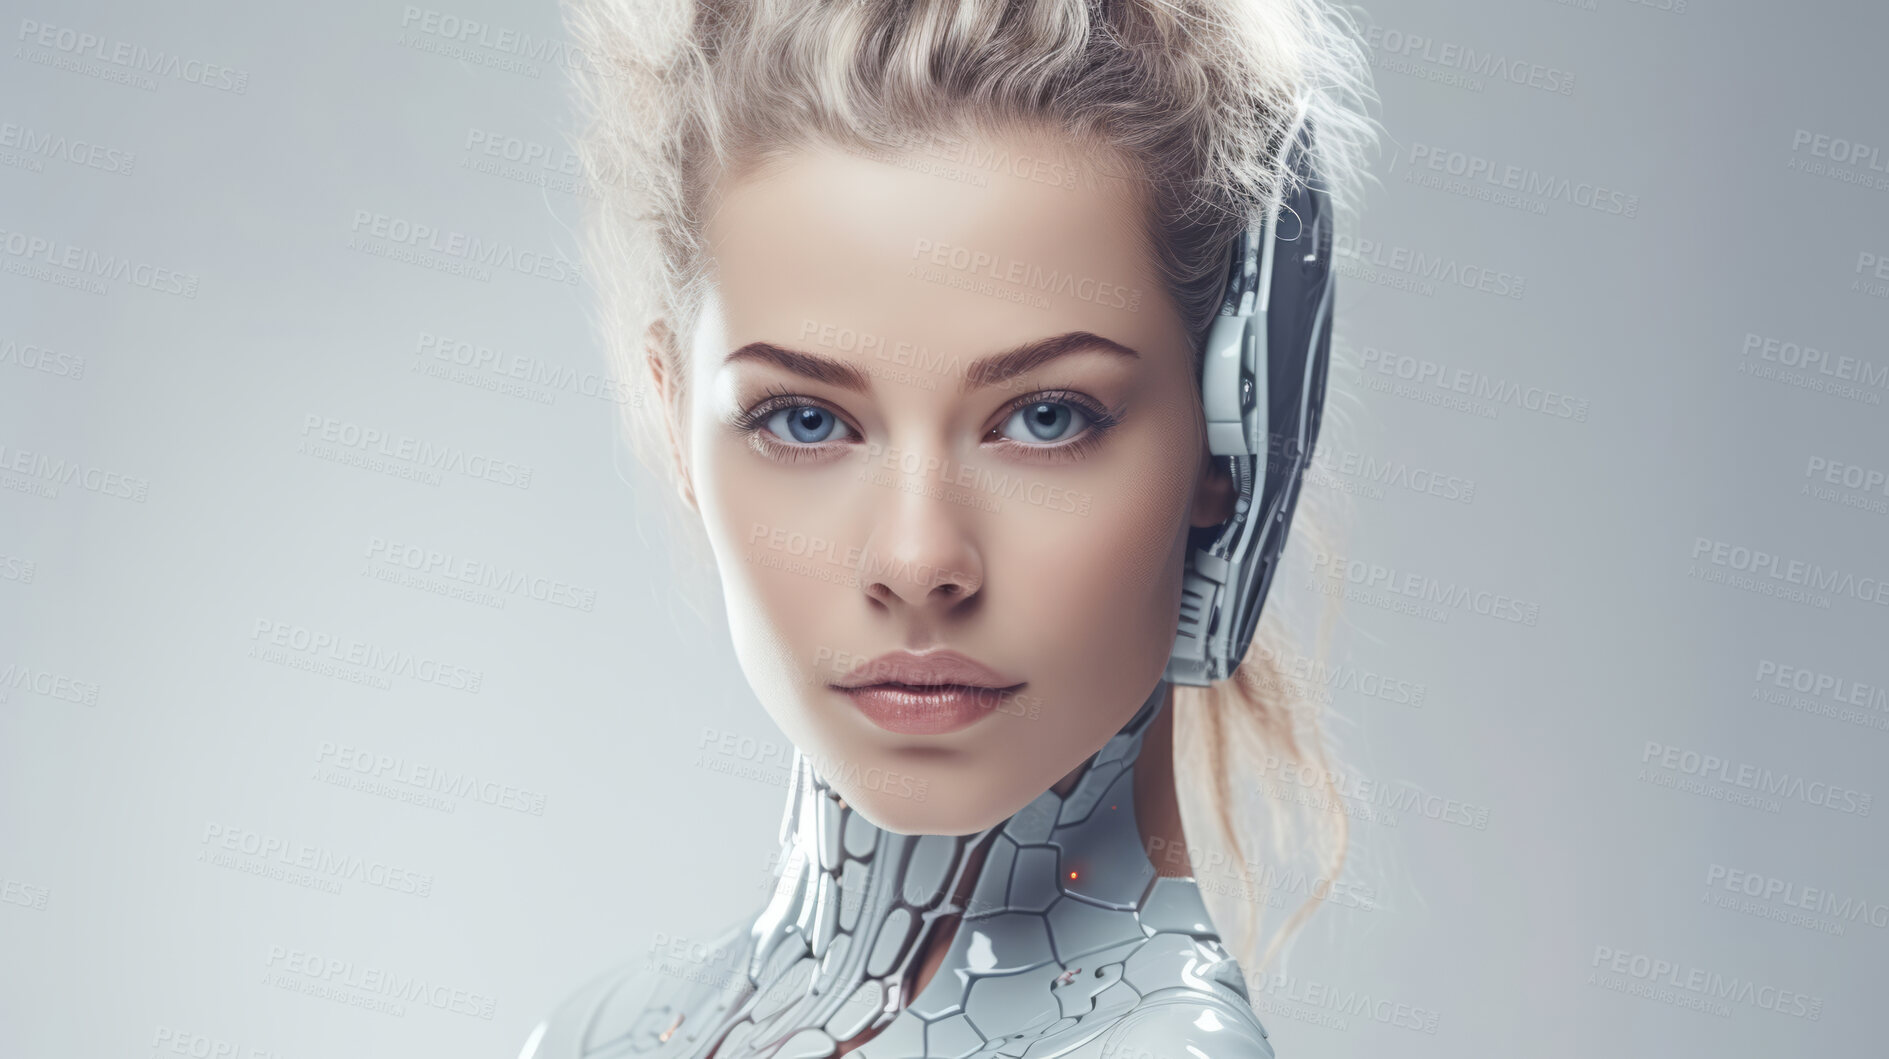 Buy stock photo Futuristic android, robot, portrait.Humanoid face on plain grey backdrop.